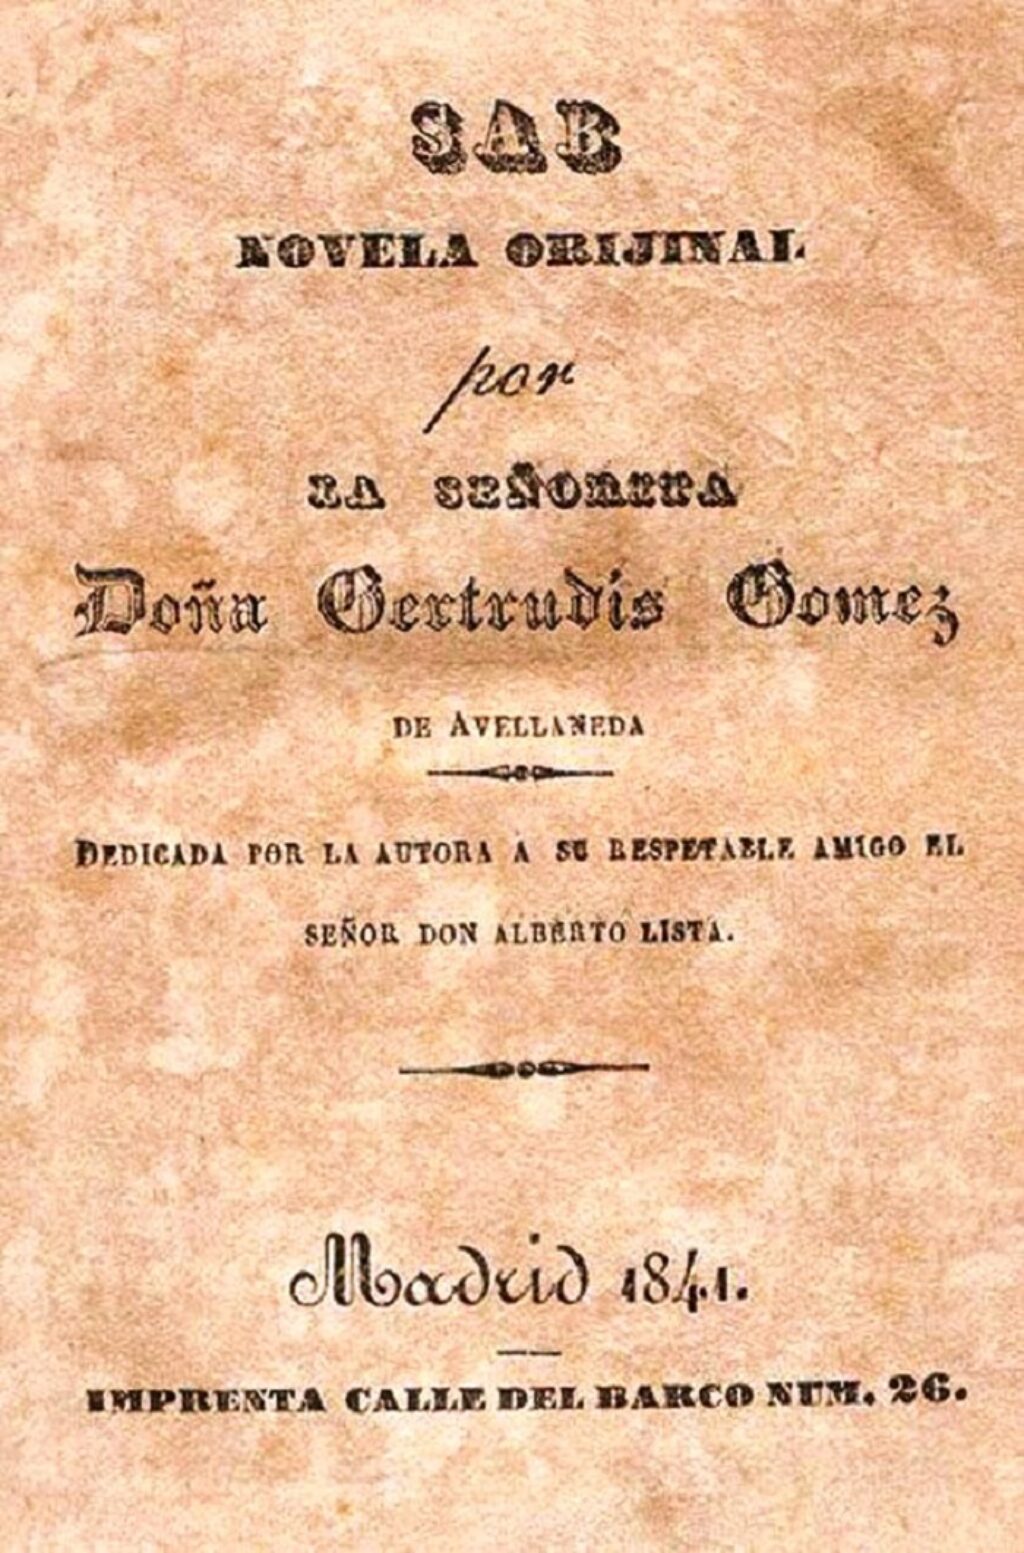 Portada de edición príncipe de "Sab", novela de Gertrudis Gómez de Abellaneda. Madrid, 1841.